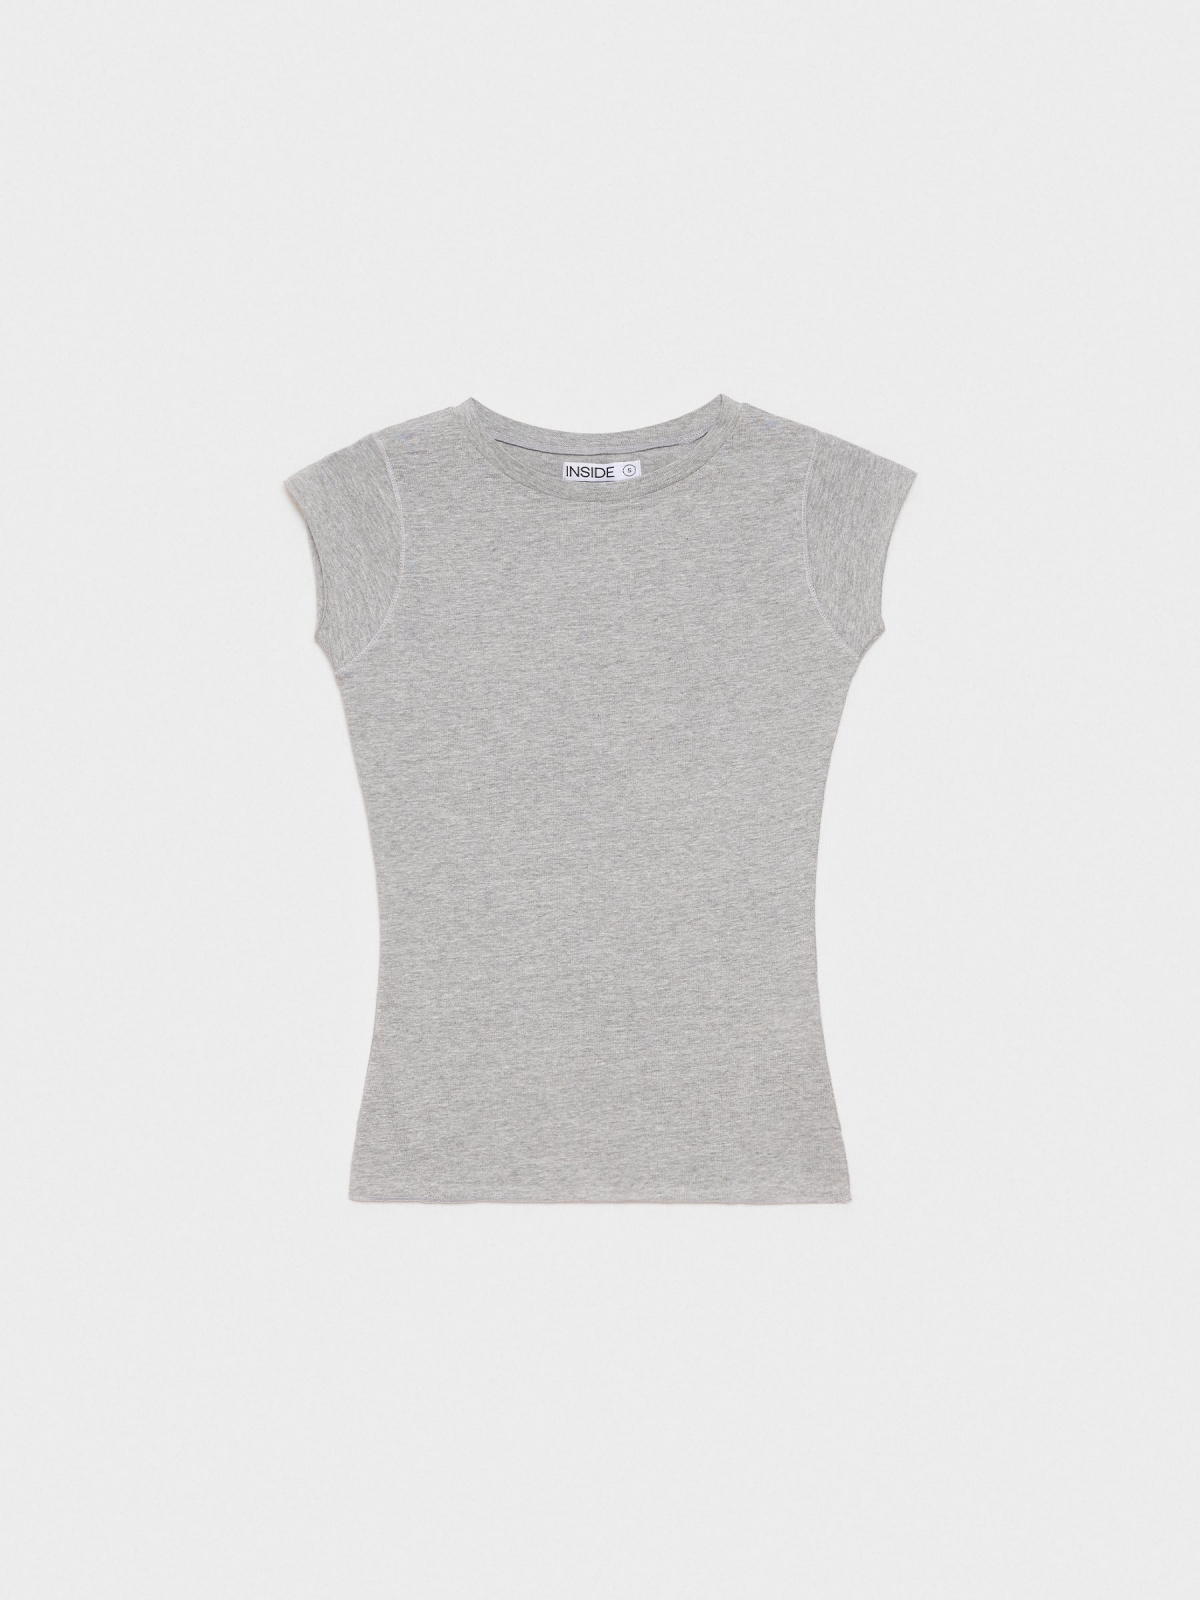  Basic short-sleeved T-shirt grey